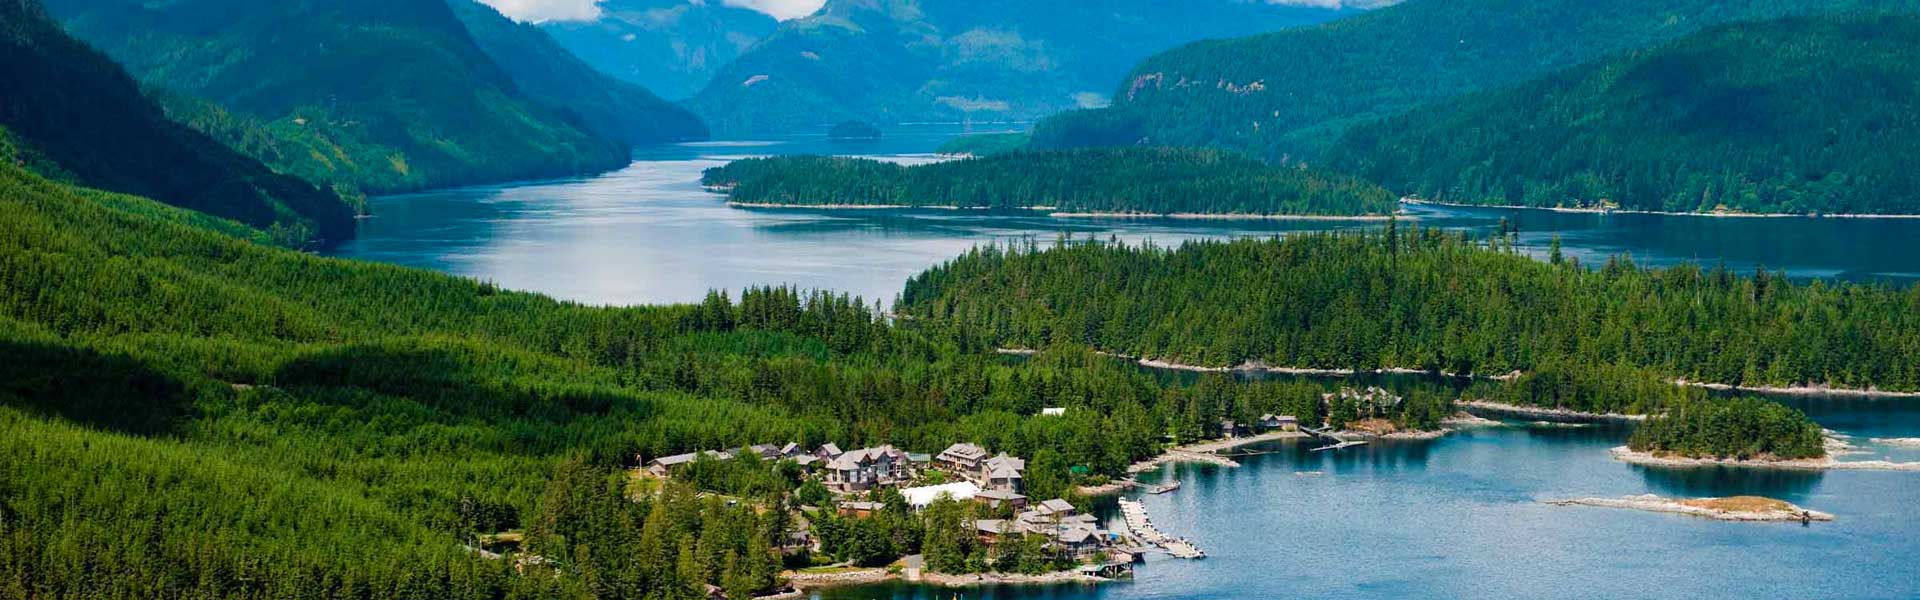 Vancouver Island | Tofino | Canada West Coast | Luxury Lodges & Road Trips